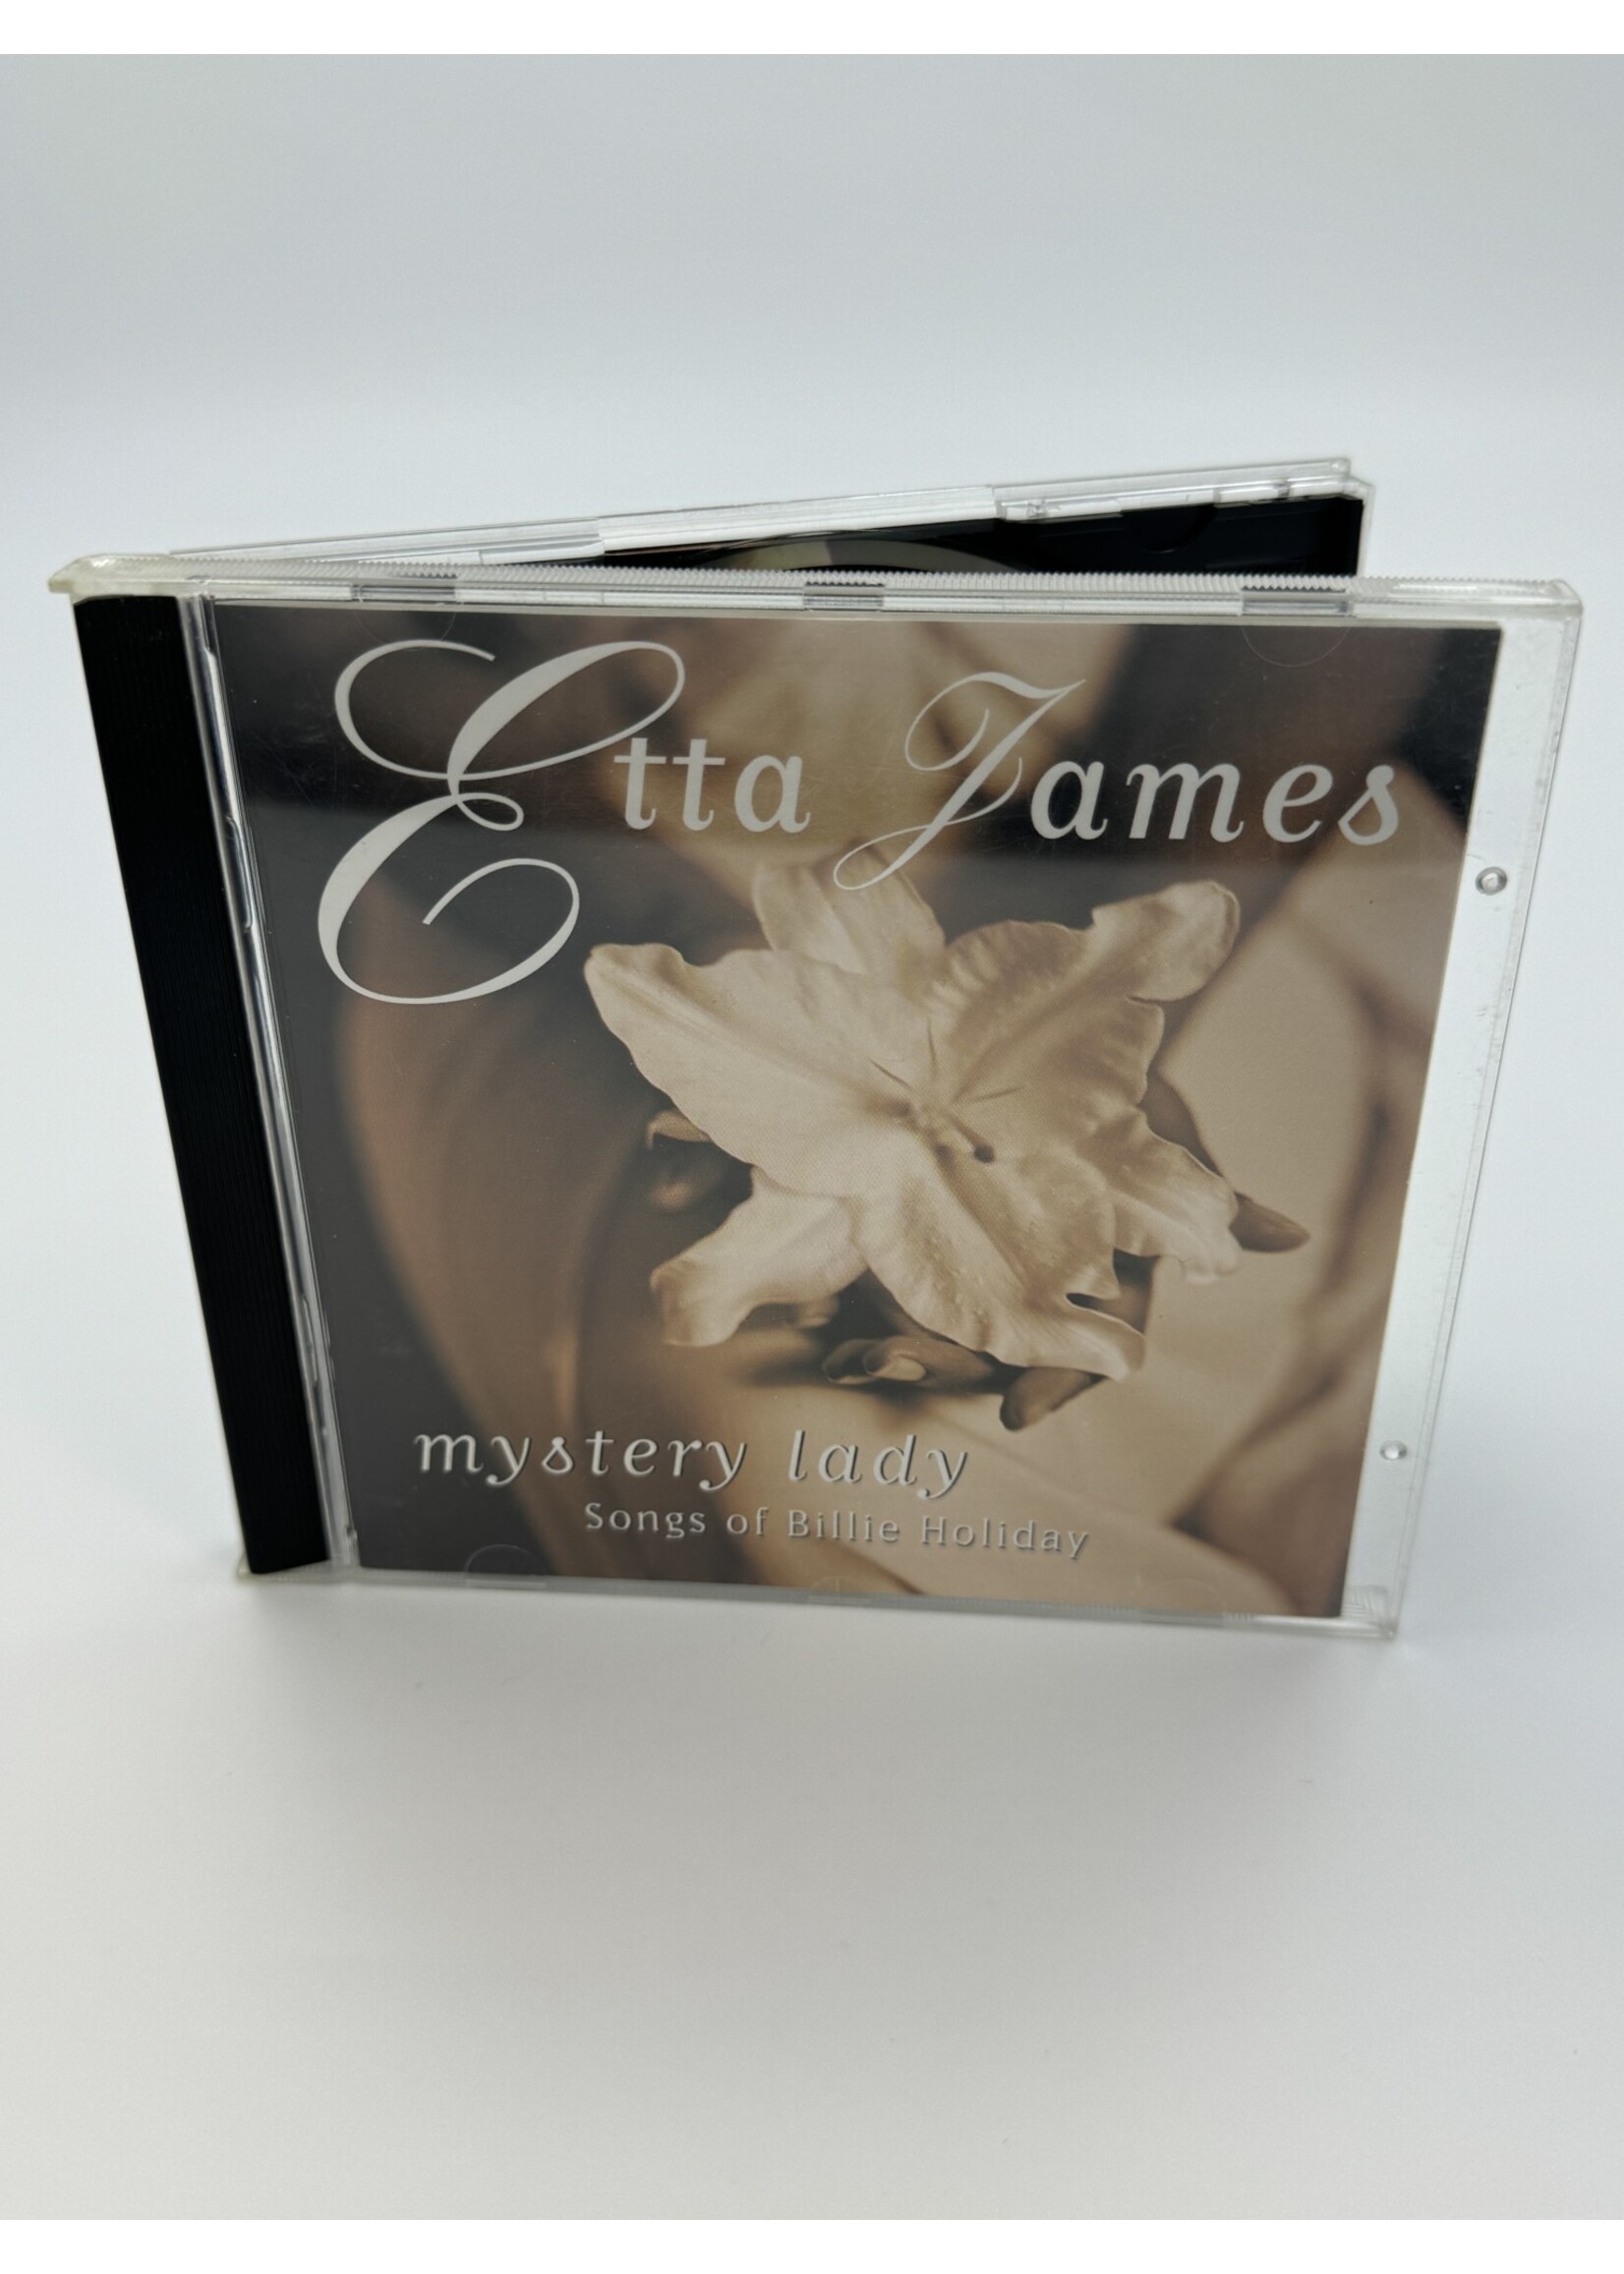 CD Etta James Mystery Lady Songs Of Billie Holiday CD